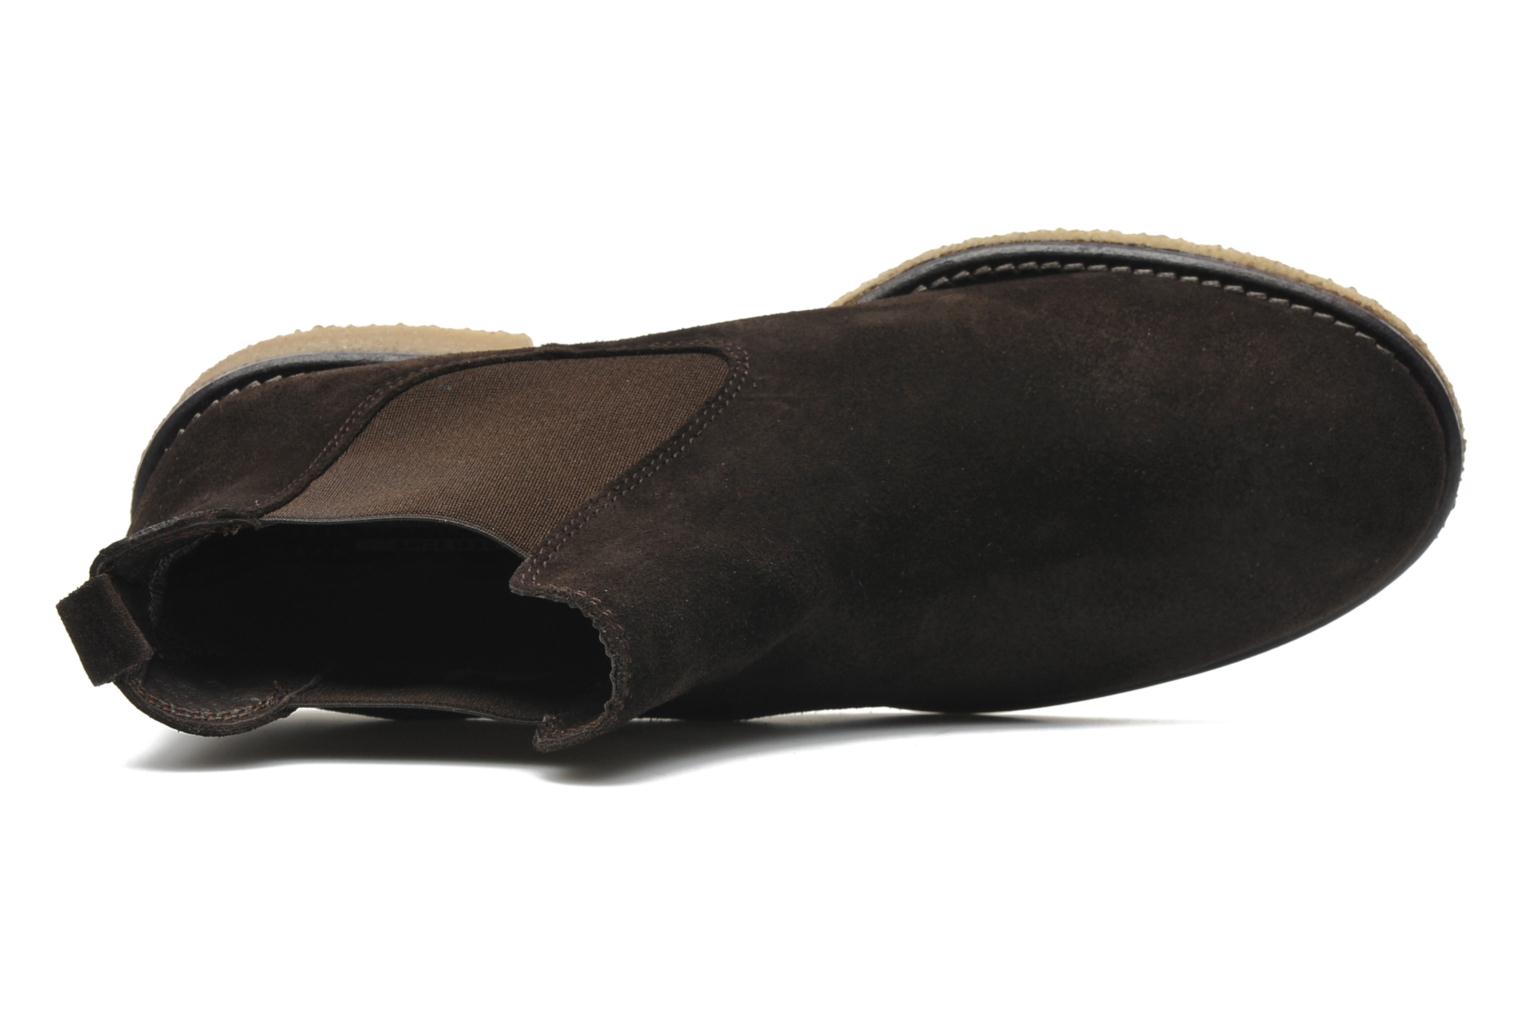 Us polo assn Faris Suede (Brown) - Ankle boots chez Sarenza (153444)